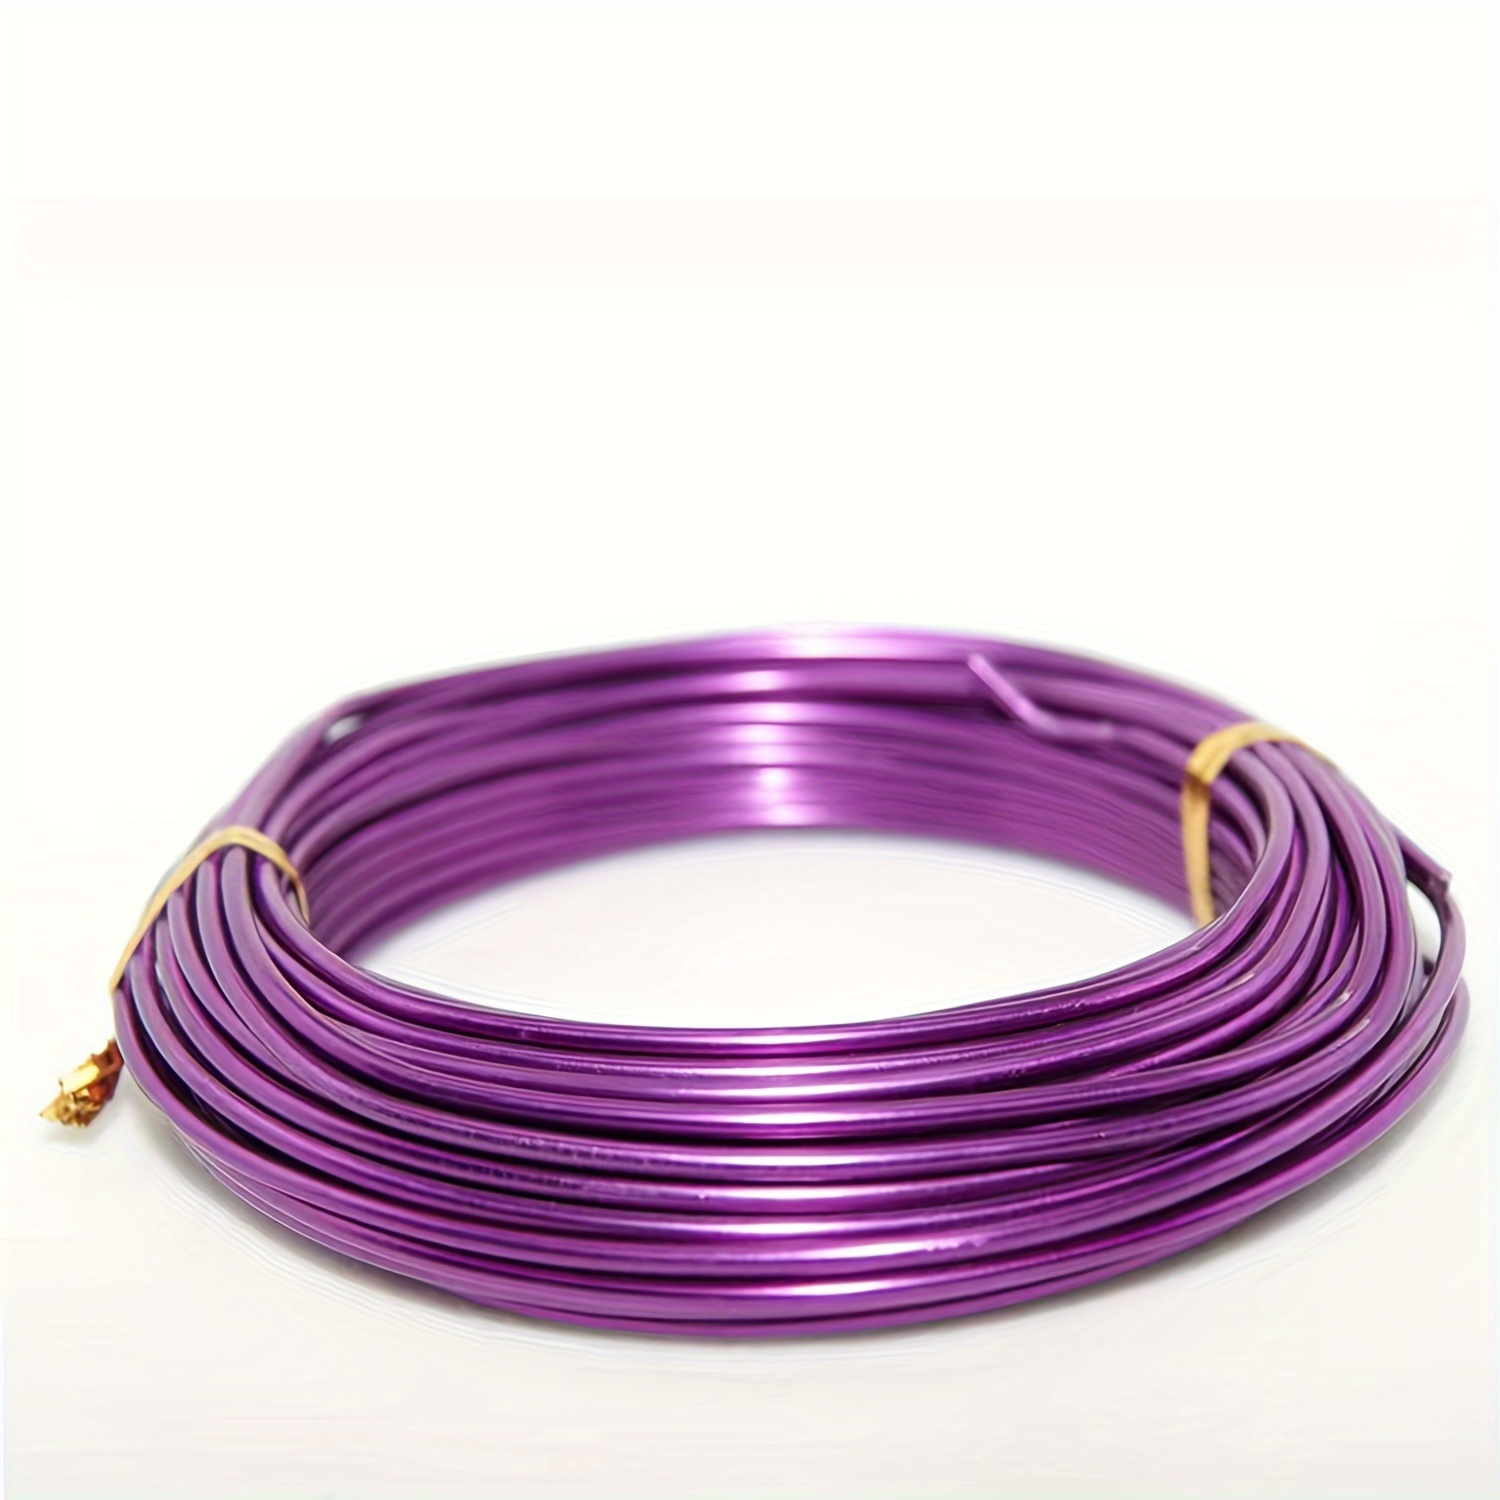 TecUnite Aluminum Wire, Wire Armature, Bendable Metal Craft Wire